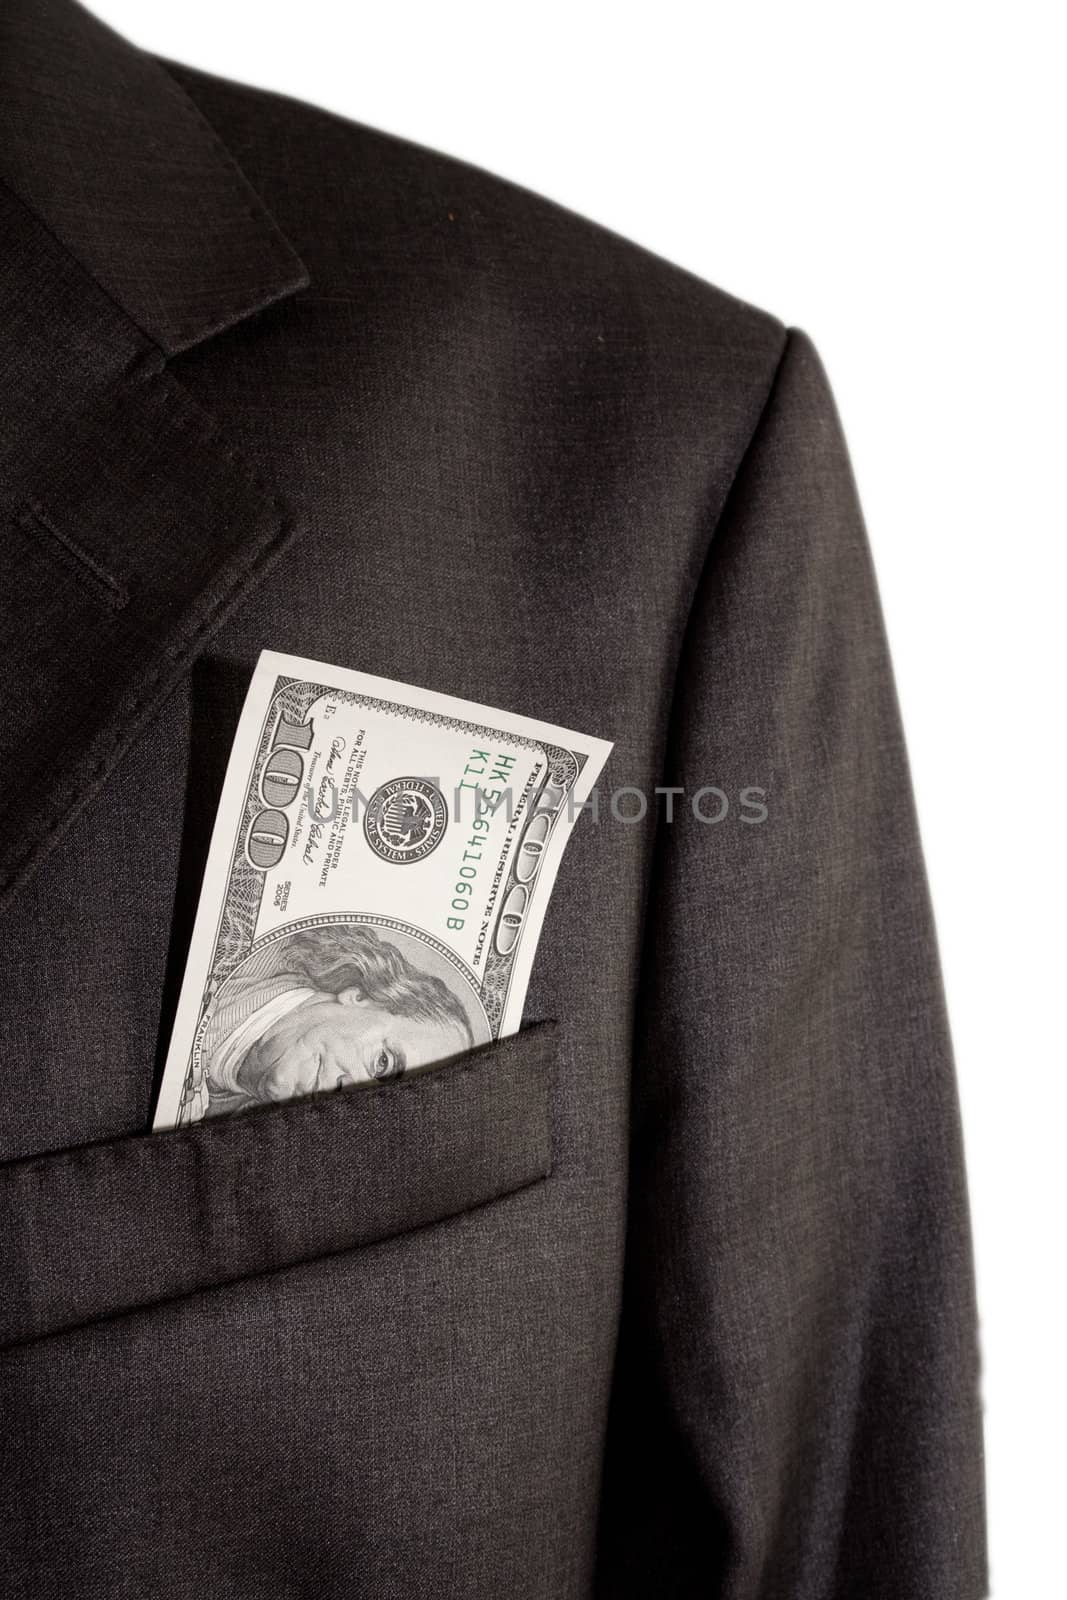 dollars in the pocket of a jacket by schankz